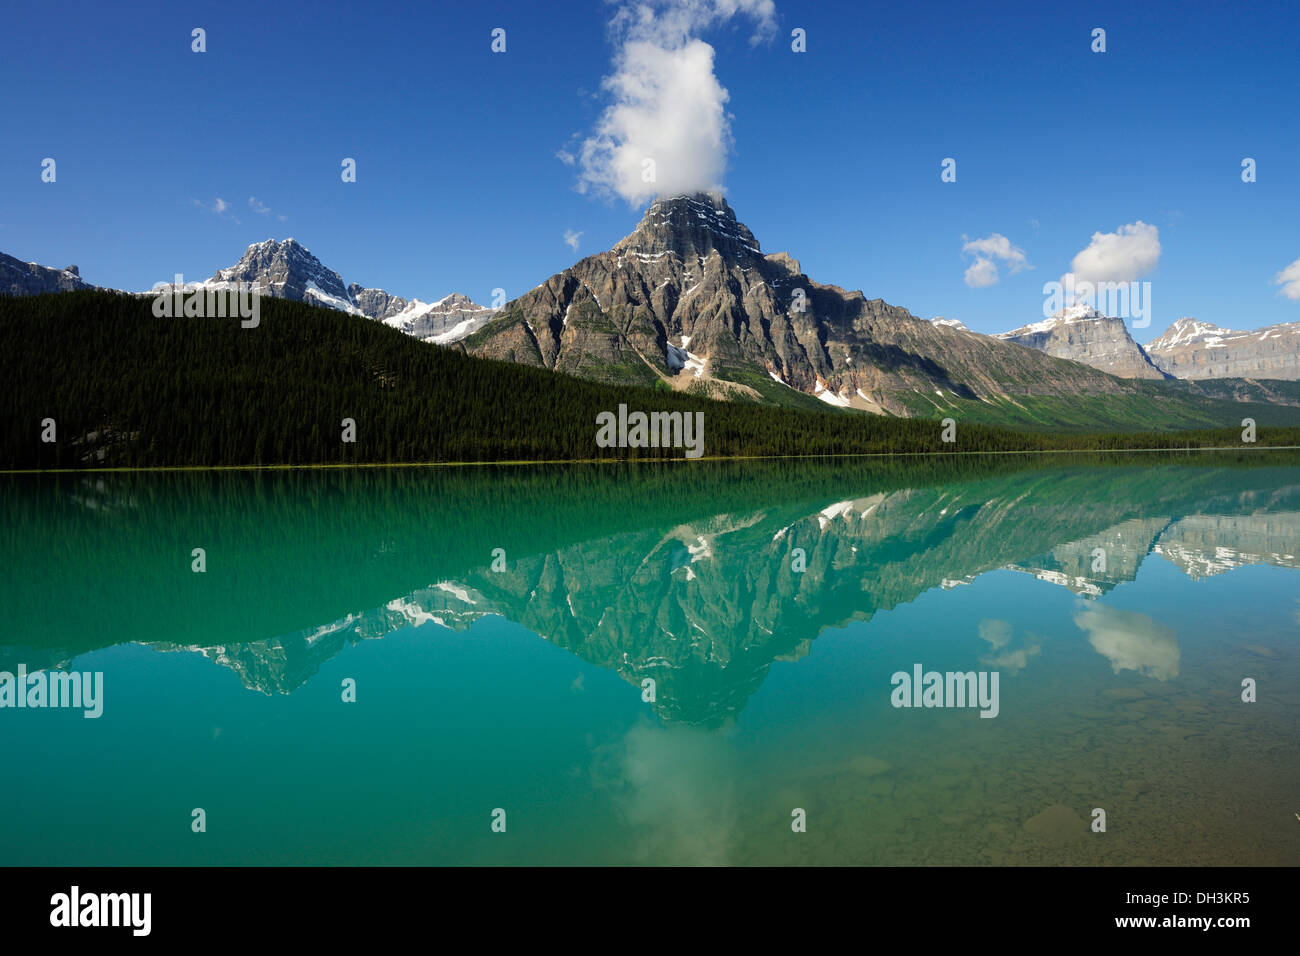 Mount Chephren reflected in the emerald-green Lake Waterfowl, Banff National Park, Alberta Province, Canada Stock Photo